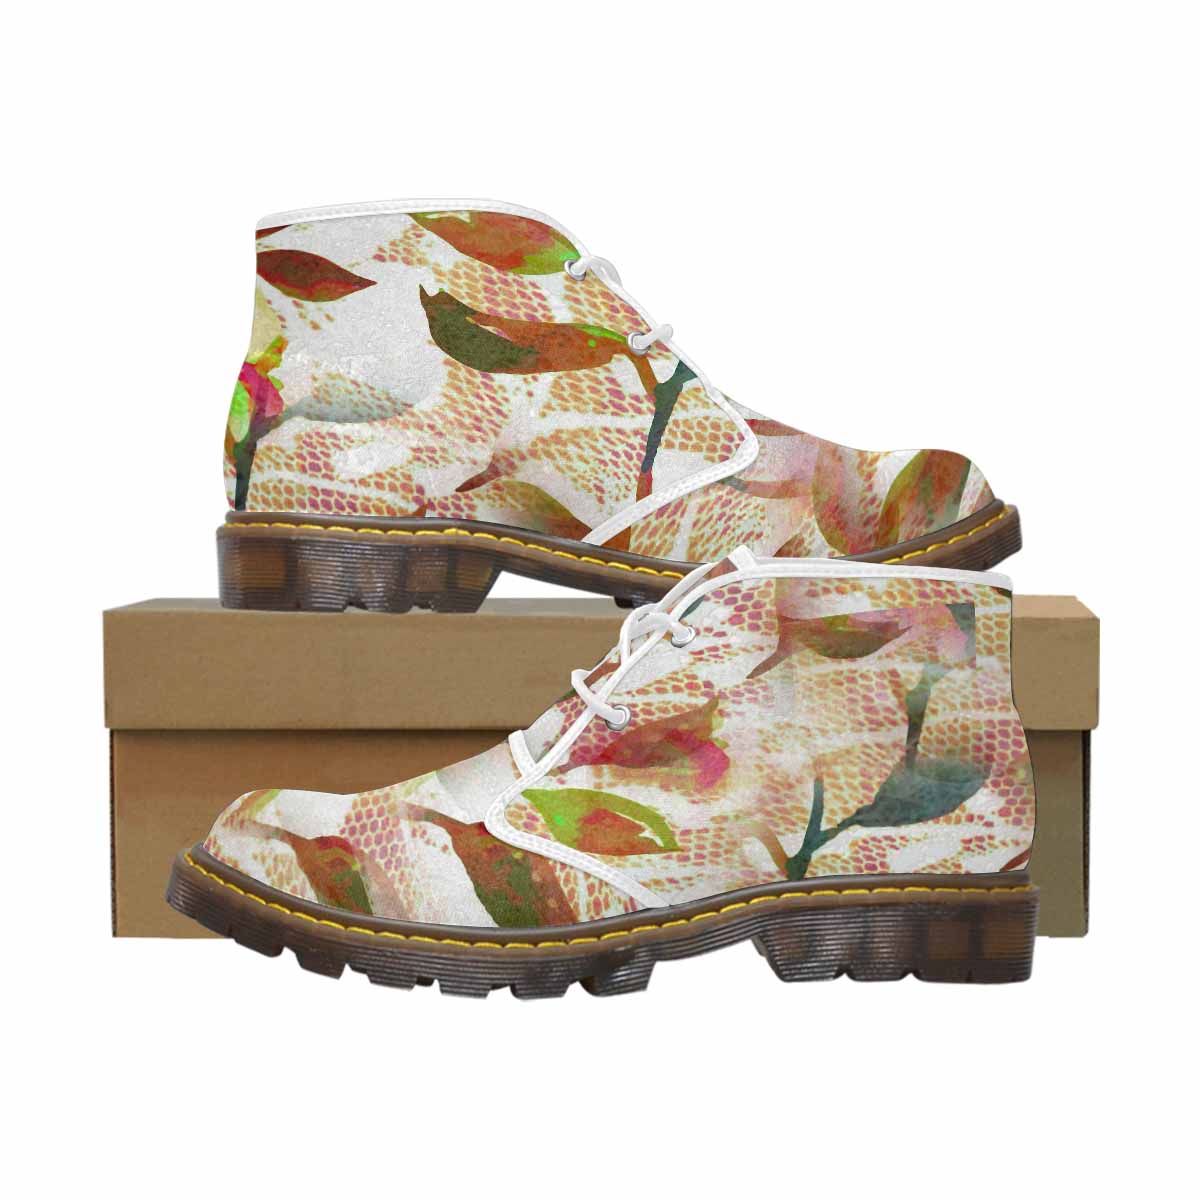 Lace Print, Cute comfy womens Chukka boots, design 52